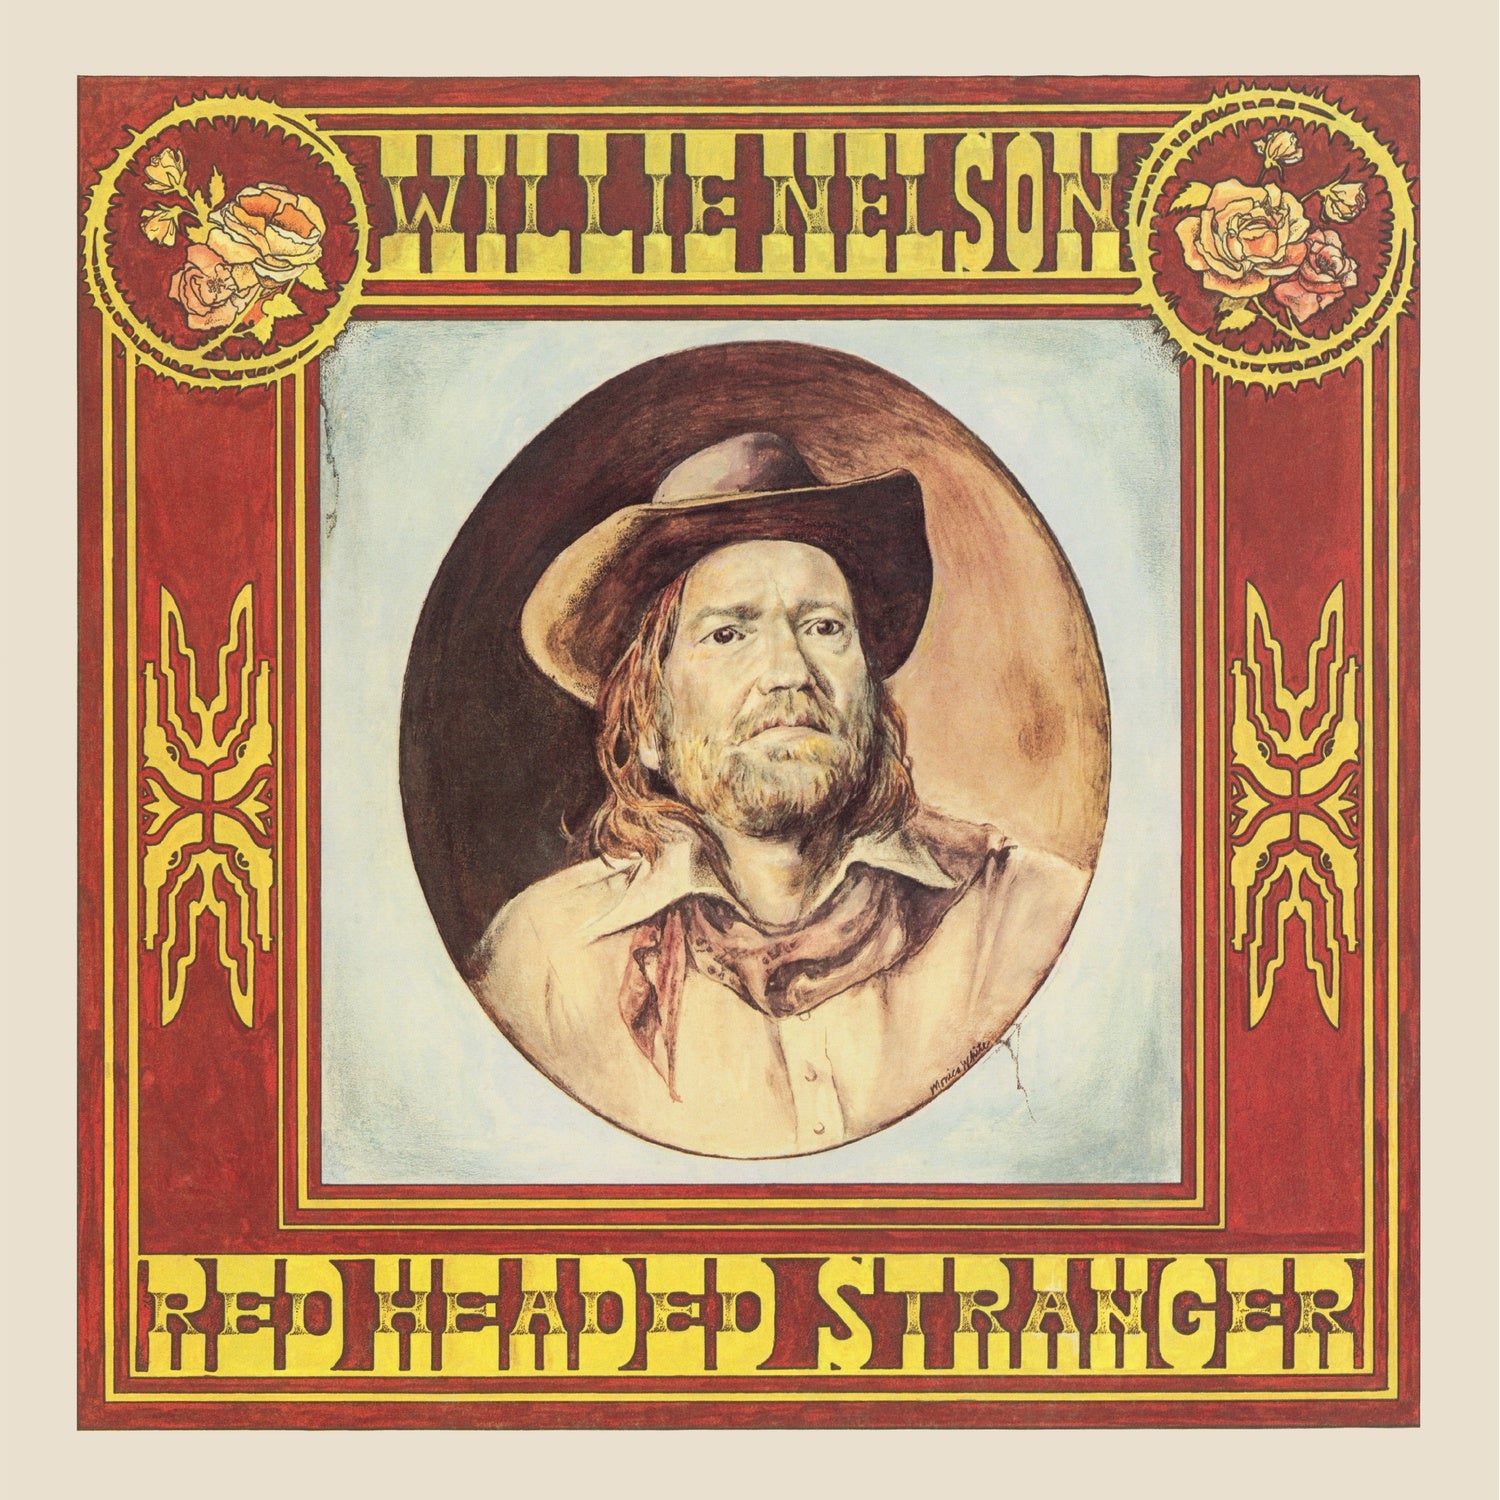 Willie Nelson ‎– Red Headed Stranger (1975) - New LP Record 2019 We Are Vinyl Vinyl - Country